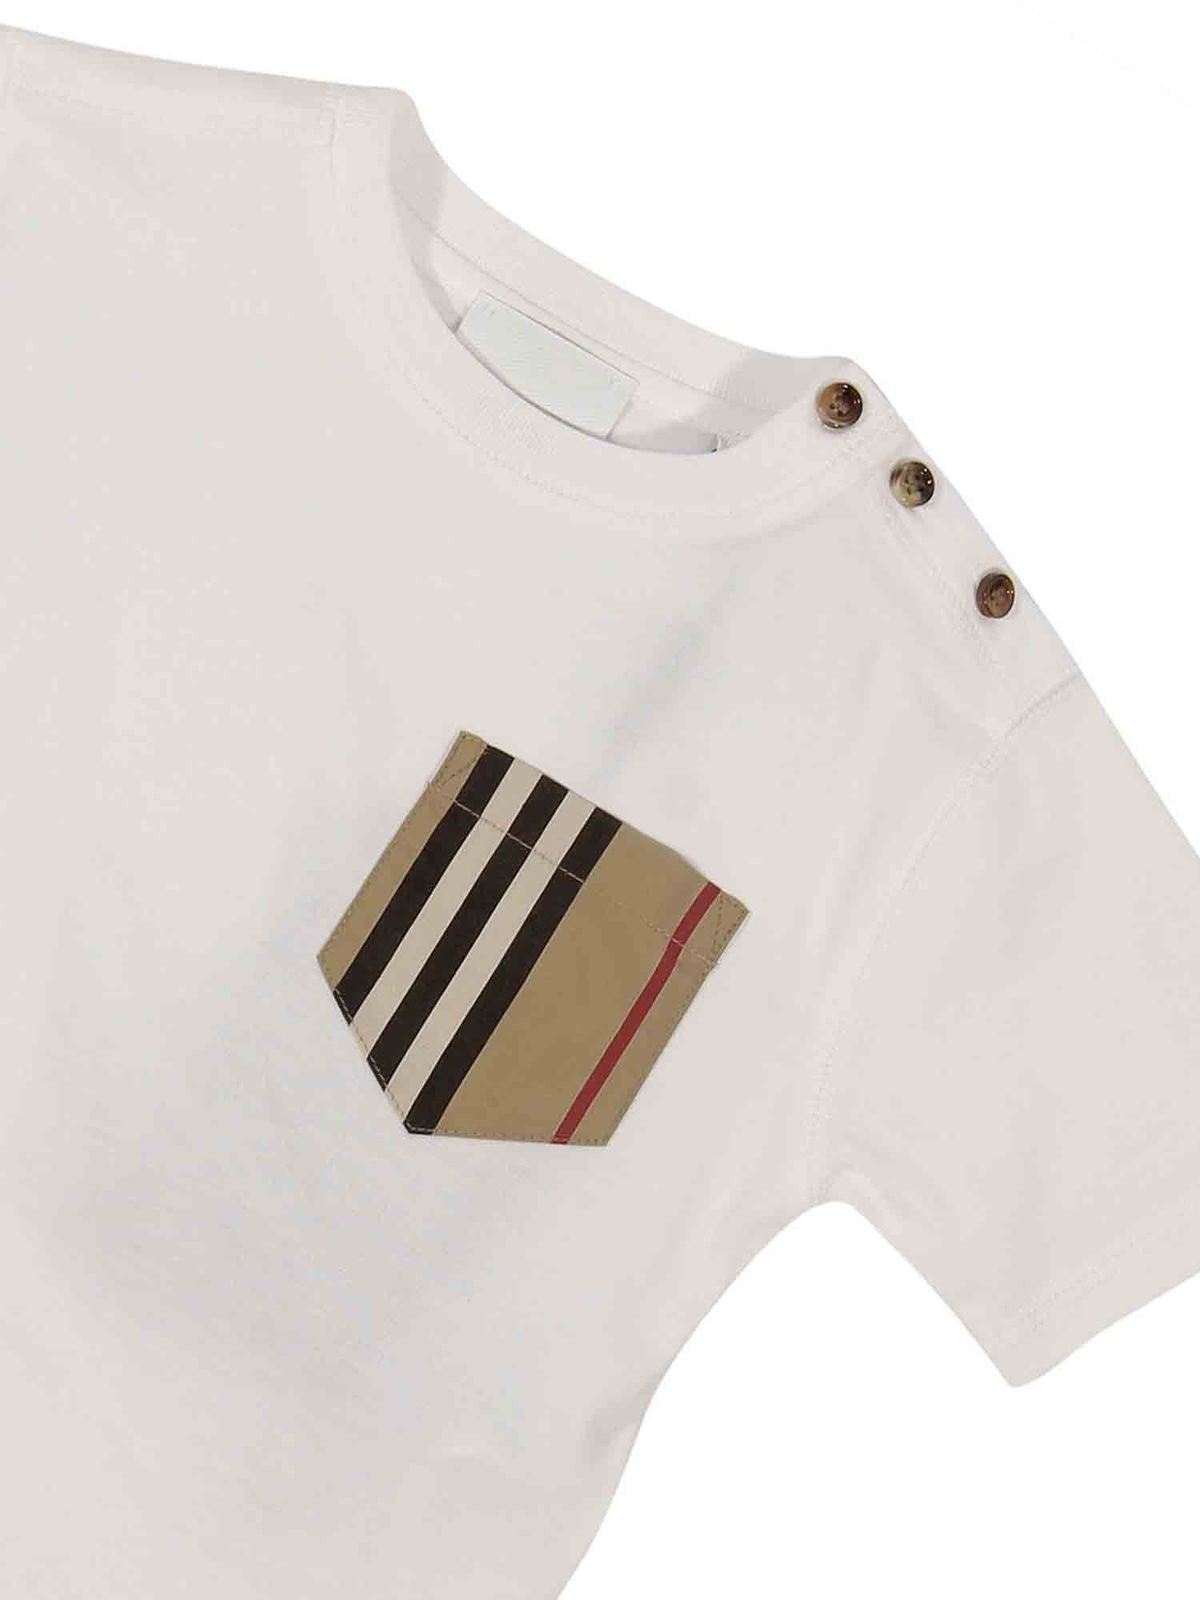 burberry striped t shirt